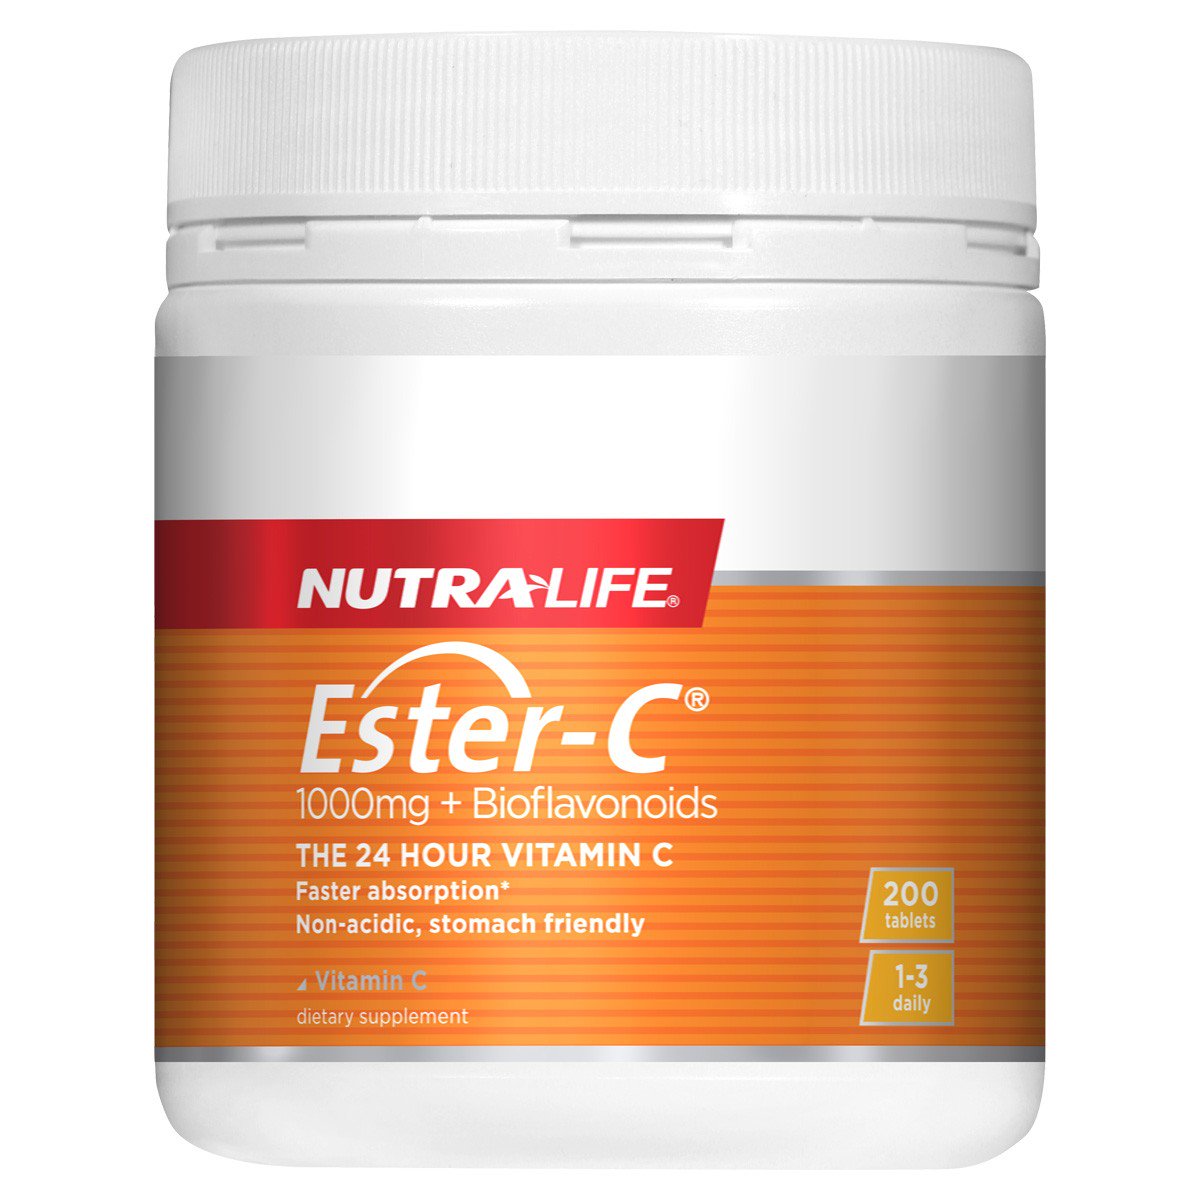 Nutra-Life Ester C 1000mg + Bioflavonoids 200 tabs